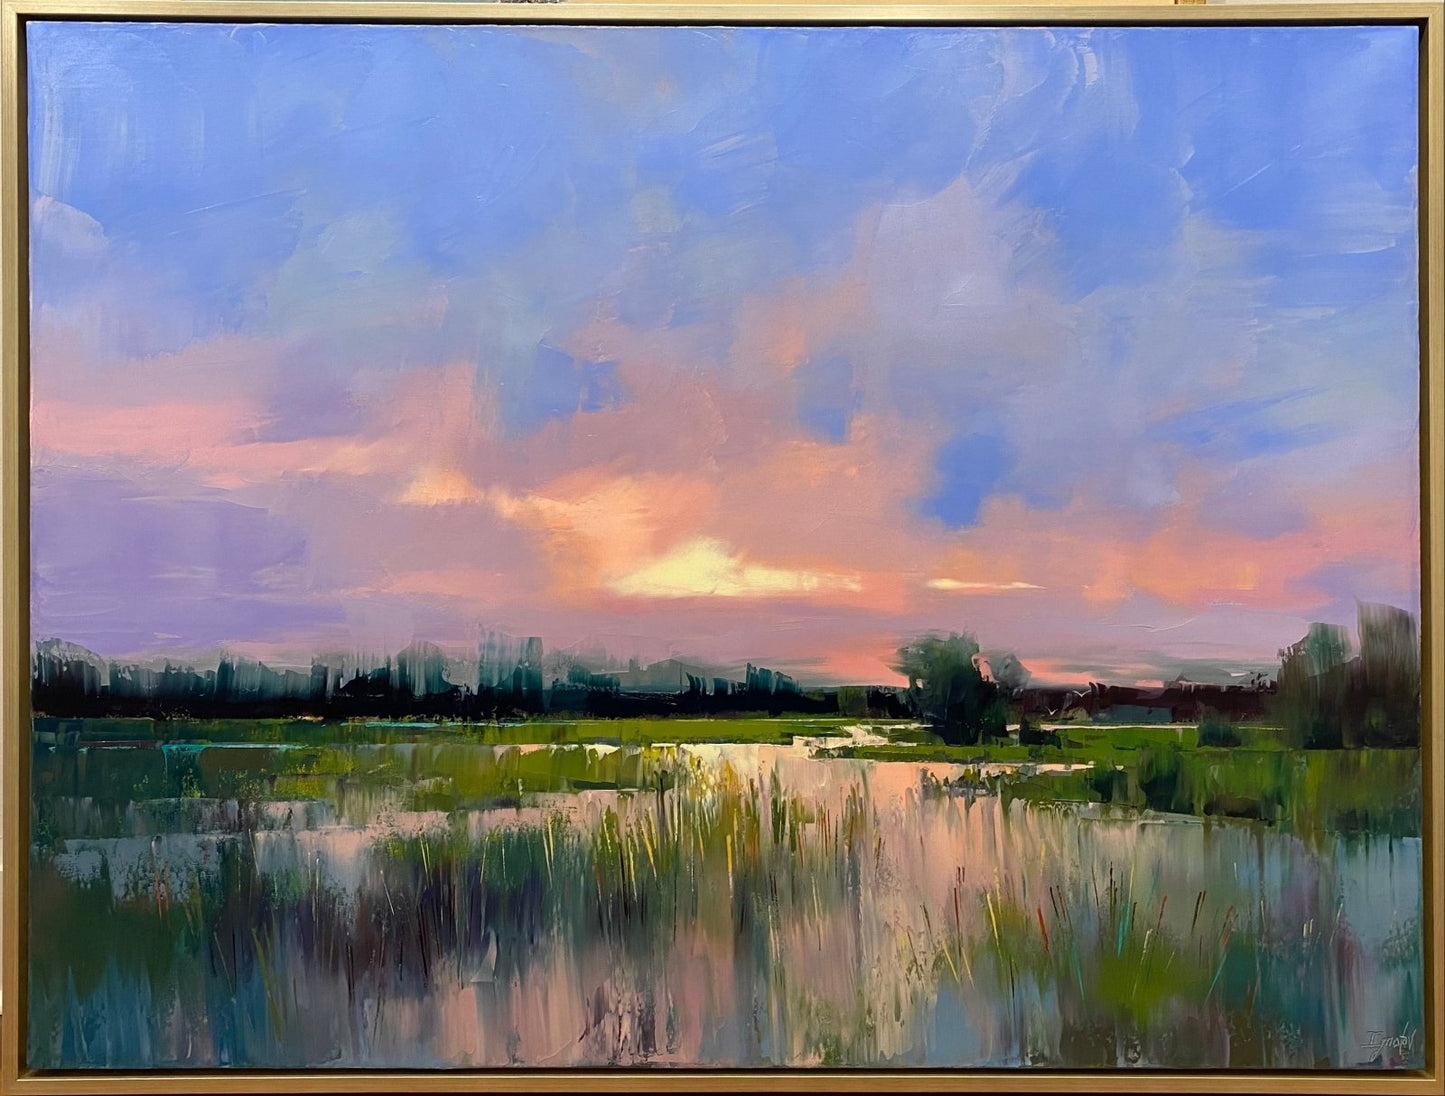 Lowcountry Sunrise by Ignat Ignatov at LePrince Galleries